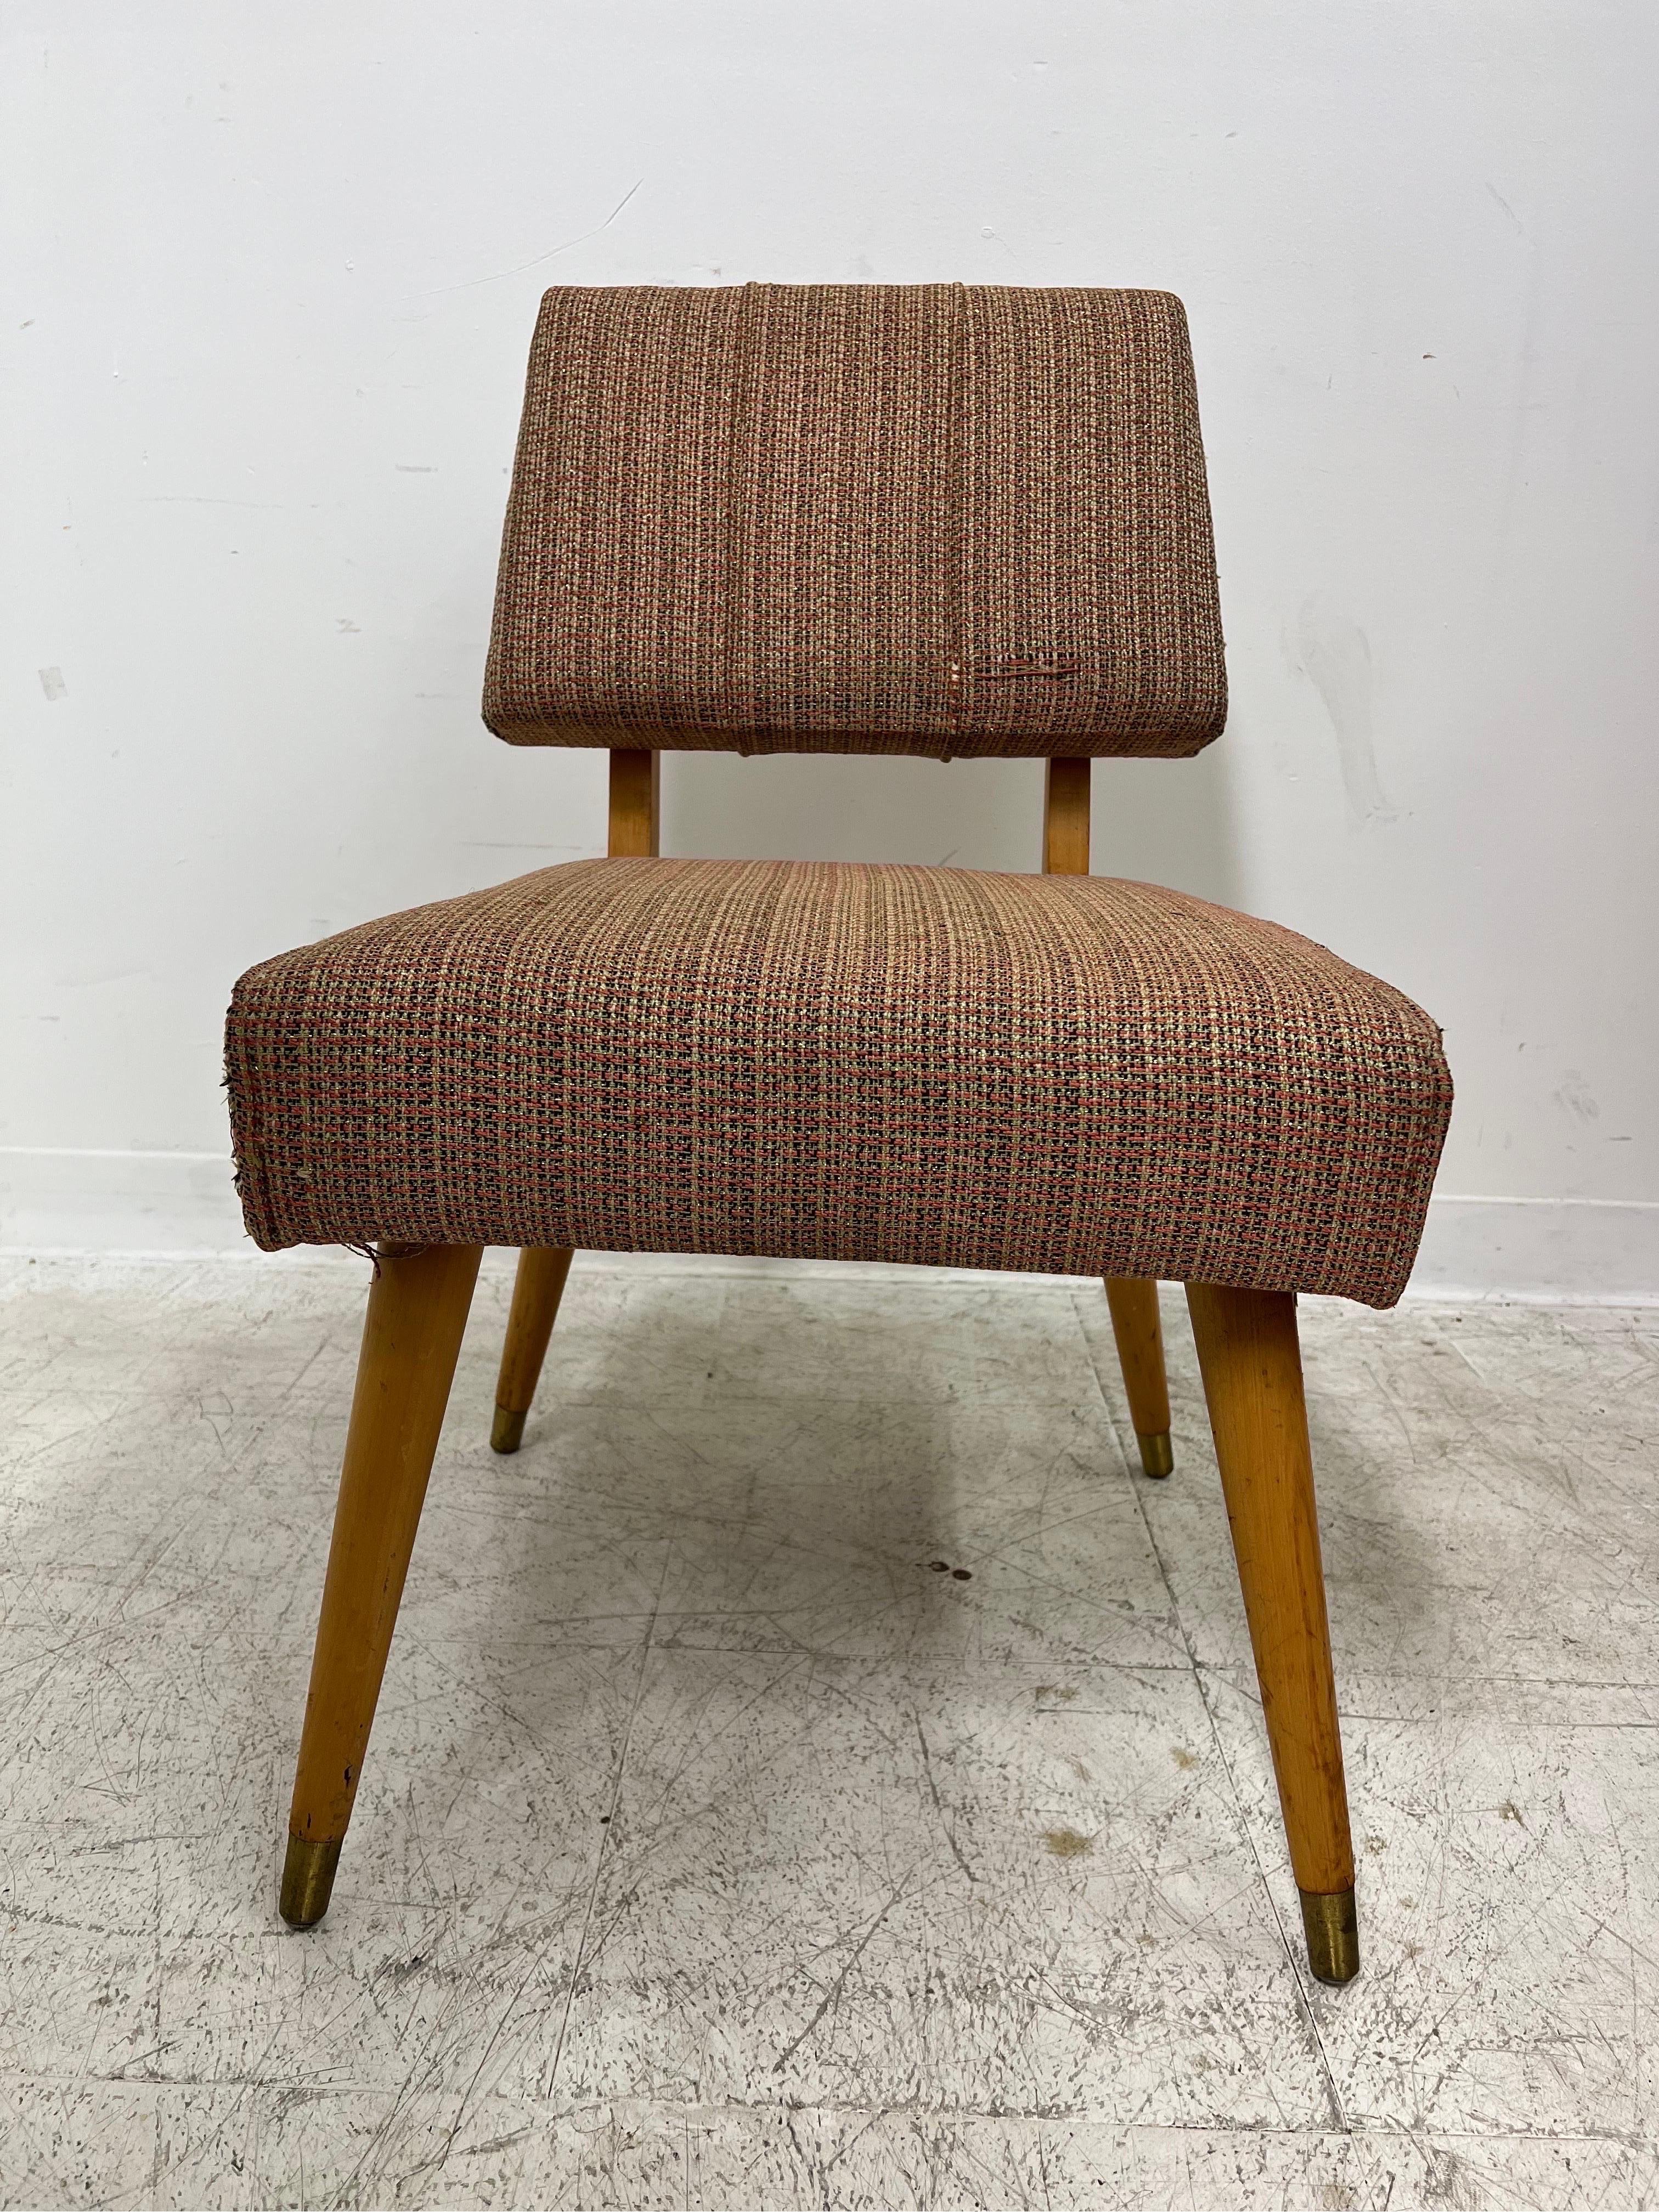 Vintage Mid Century Modern Chair

Dimensions. 18 L ; 21 1/2 P ; 30 H